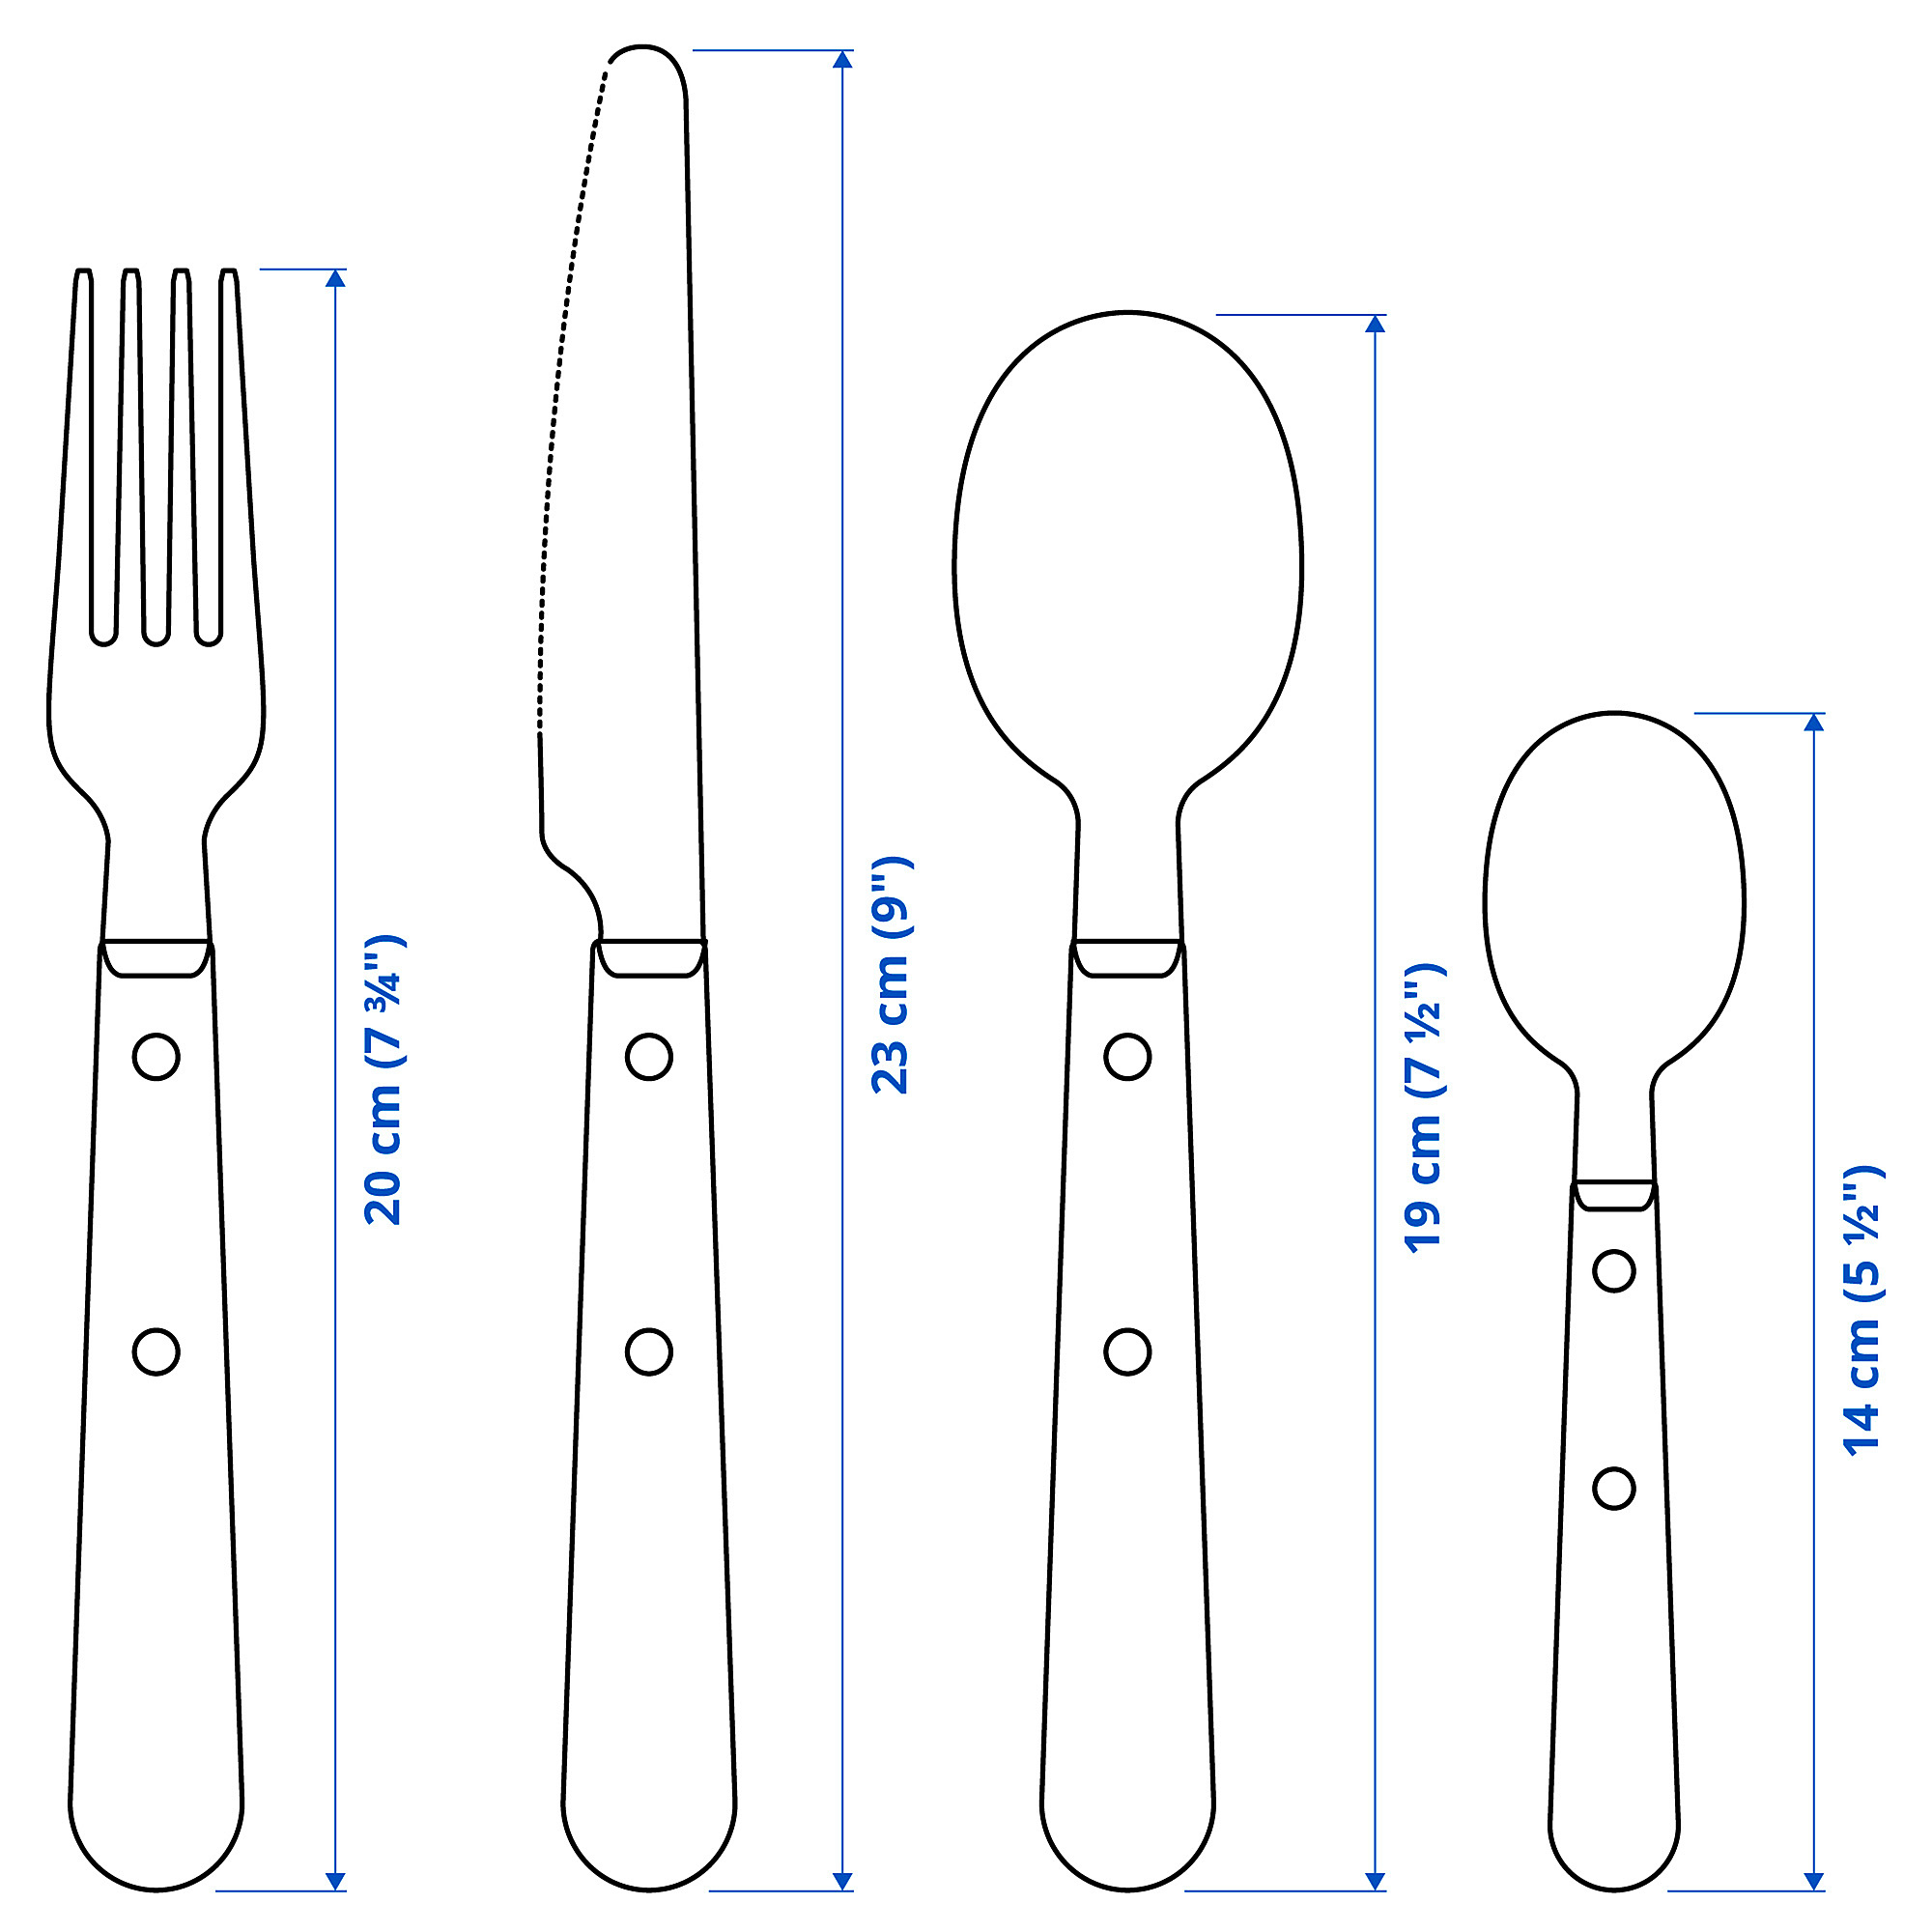 LIVNÄRA 24-piece cutlery set